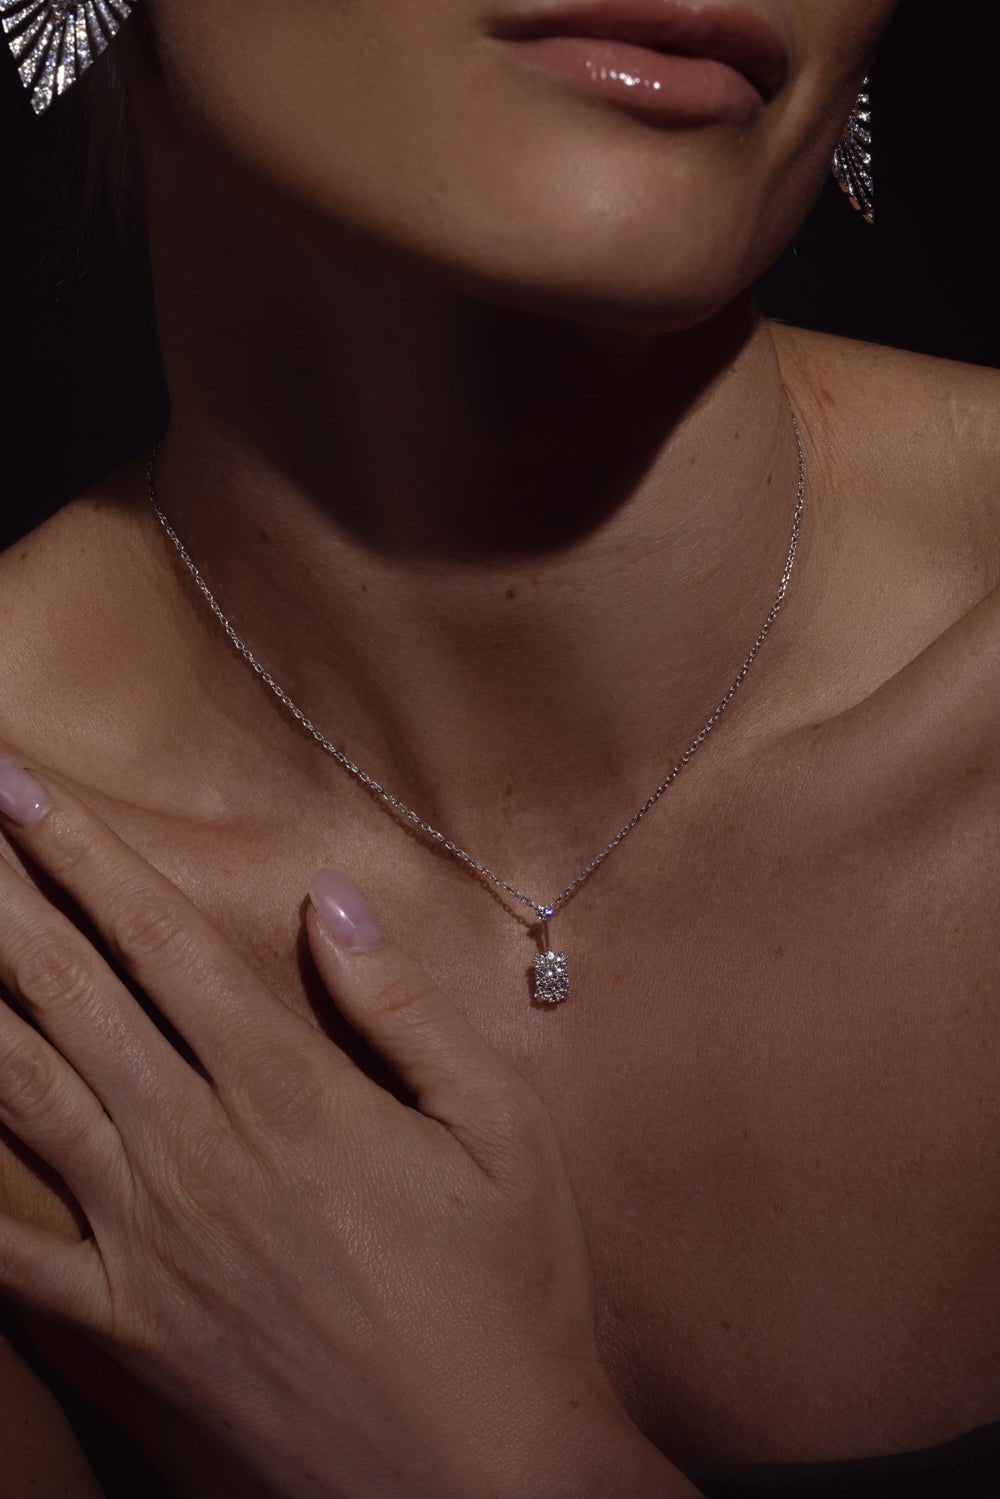 YEPREM JEWELLERY-Diamond Knot Drop Pendant Necklace-WHITE GOLD